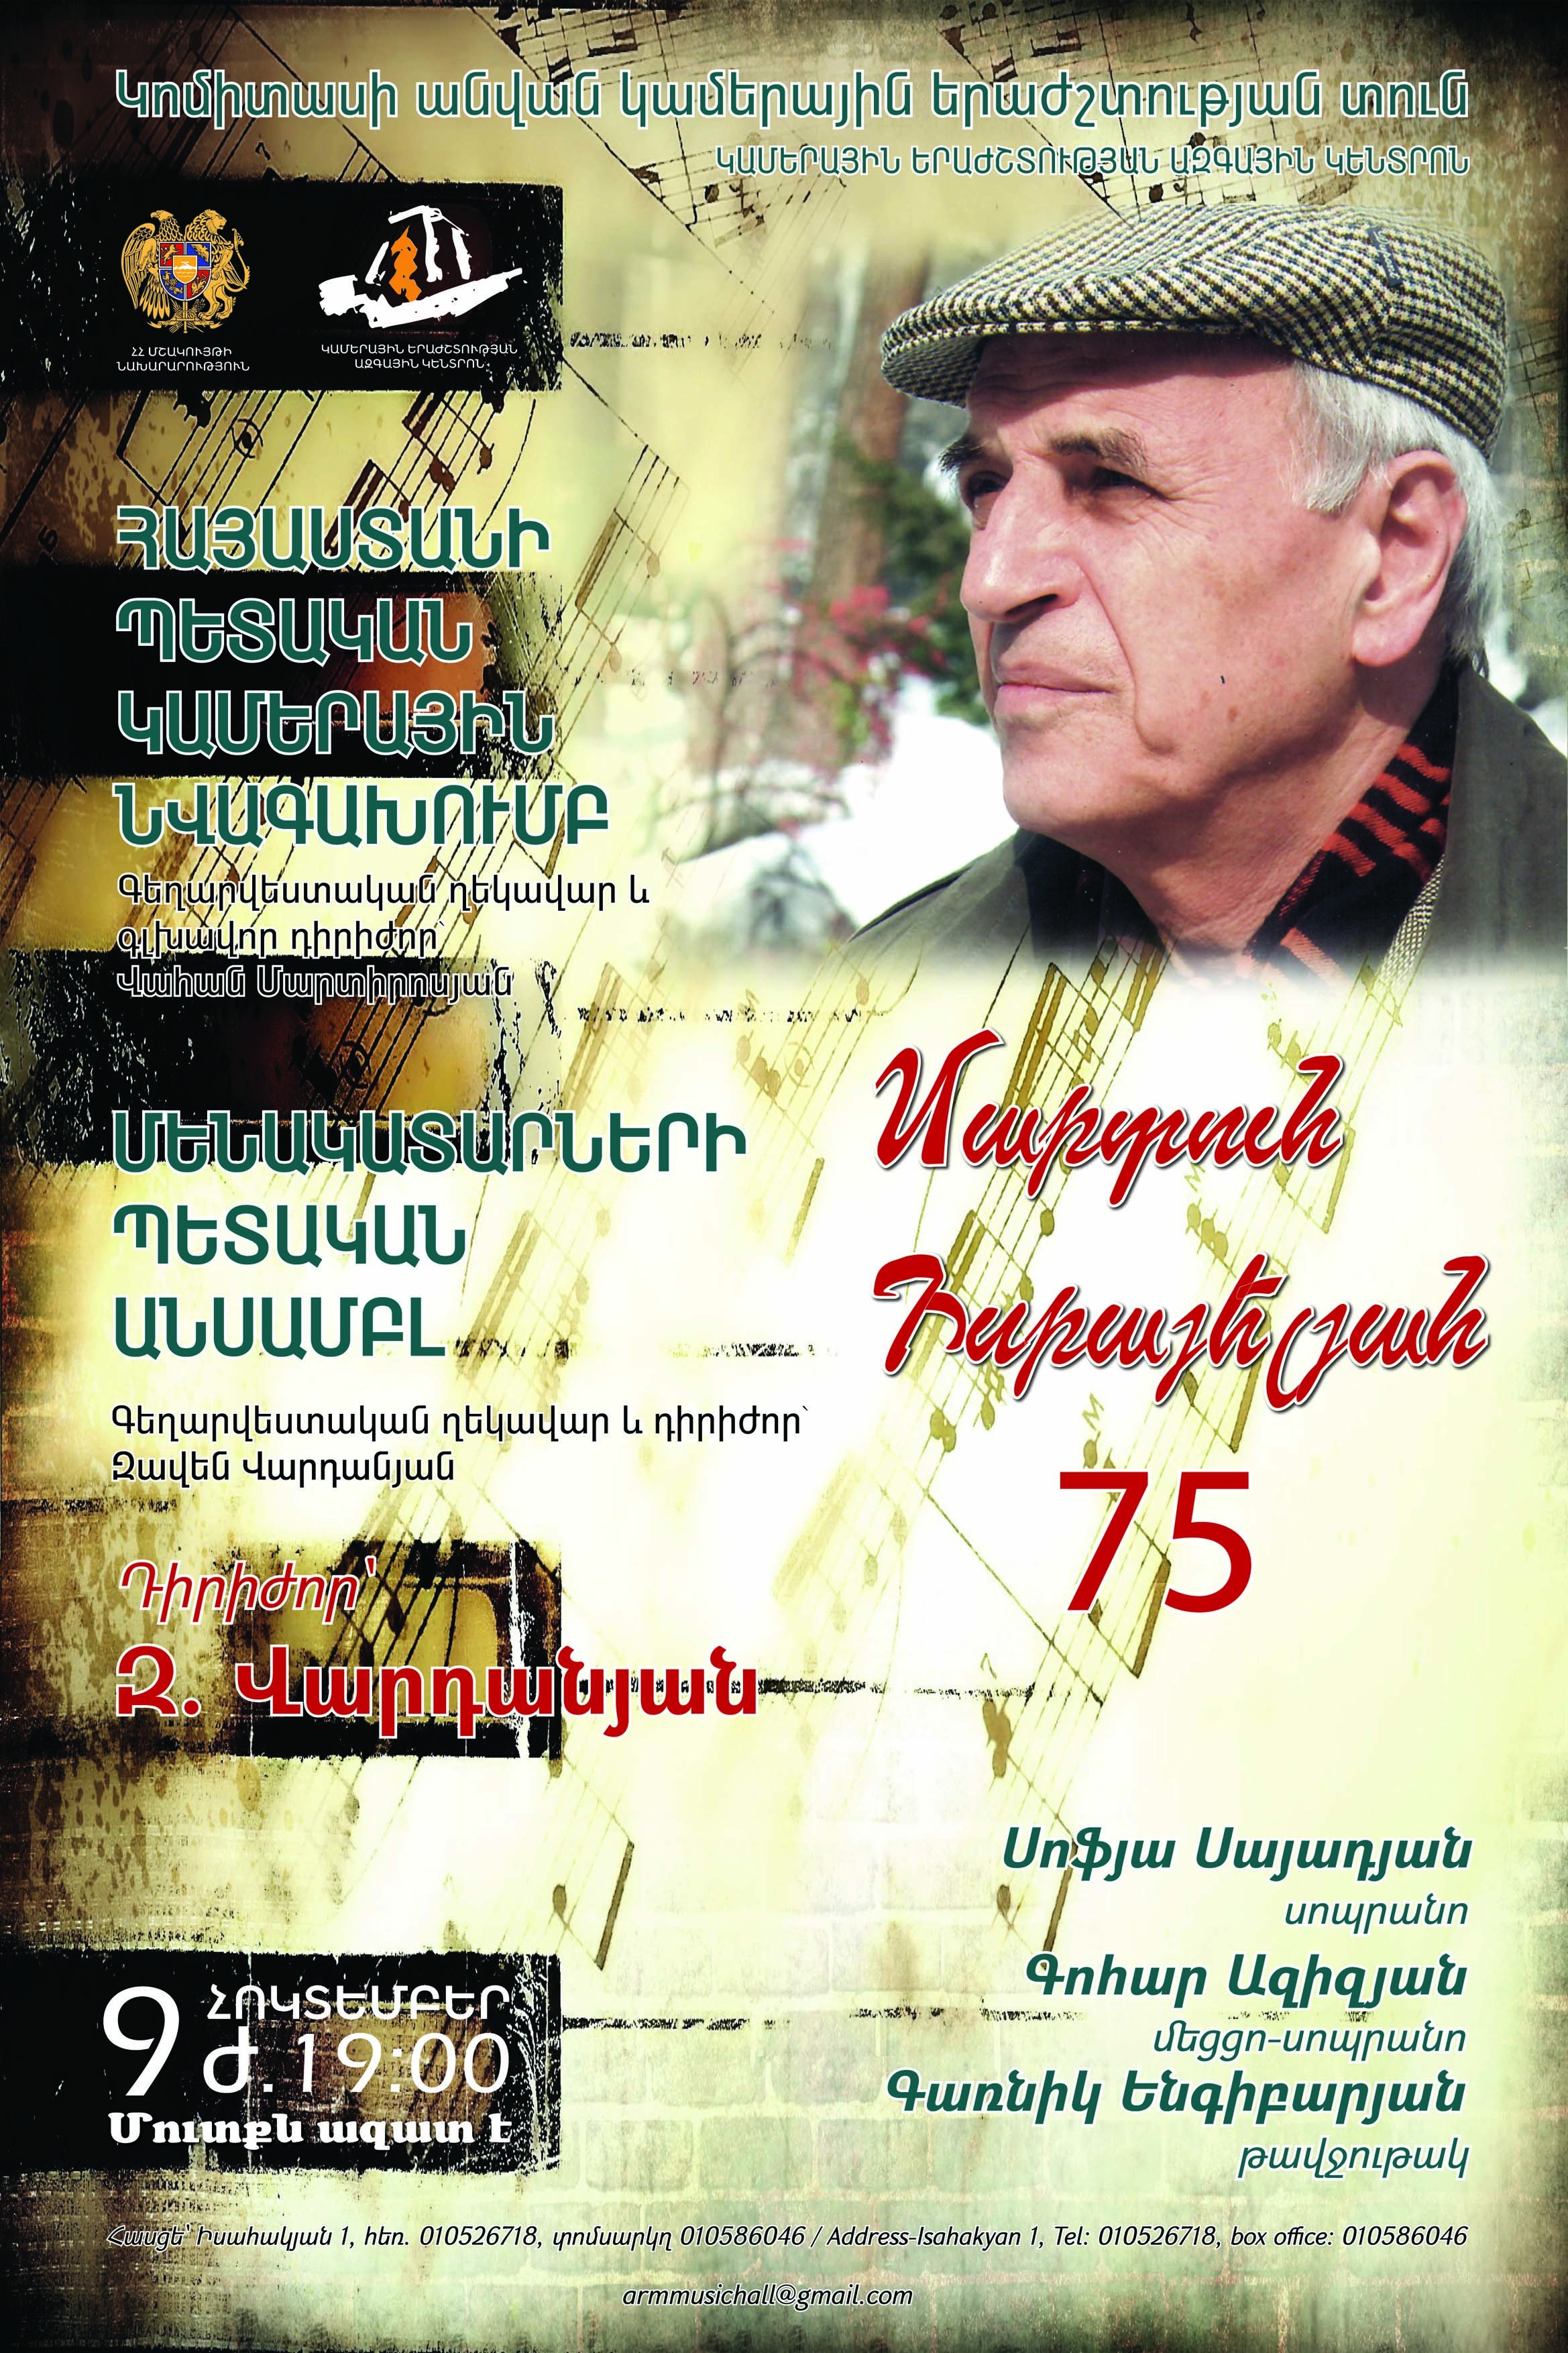 Joint jubilee concert to mark Martun Israelyan's 75th birthday anniversary